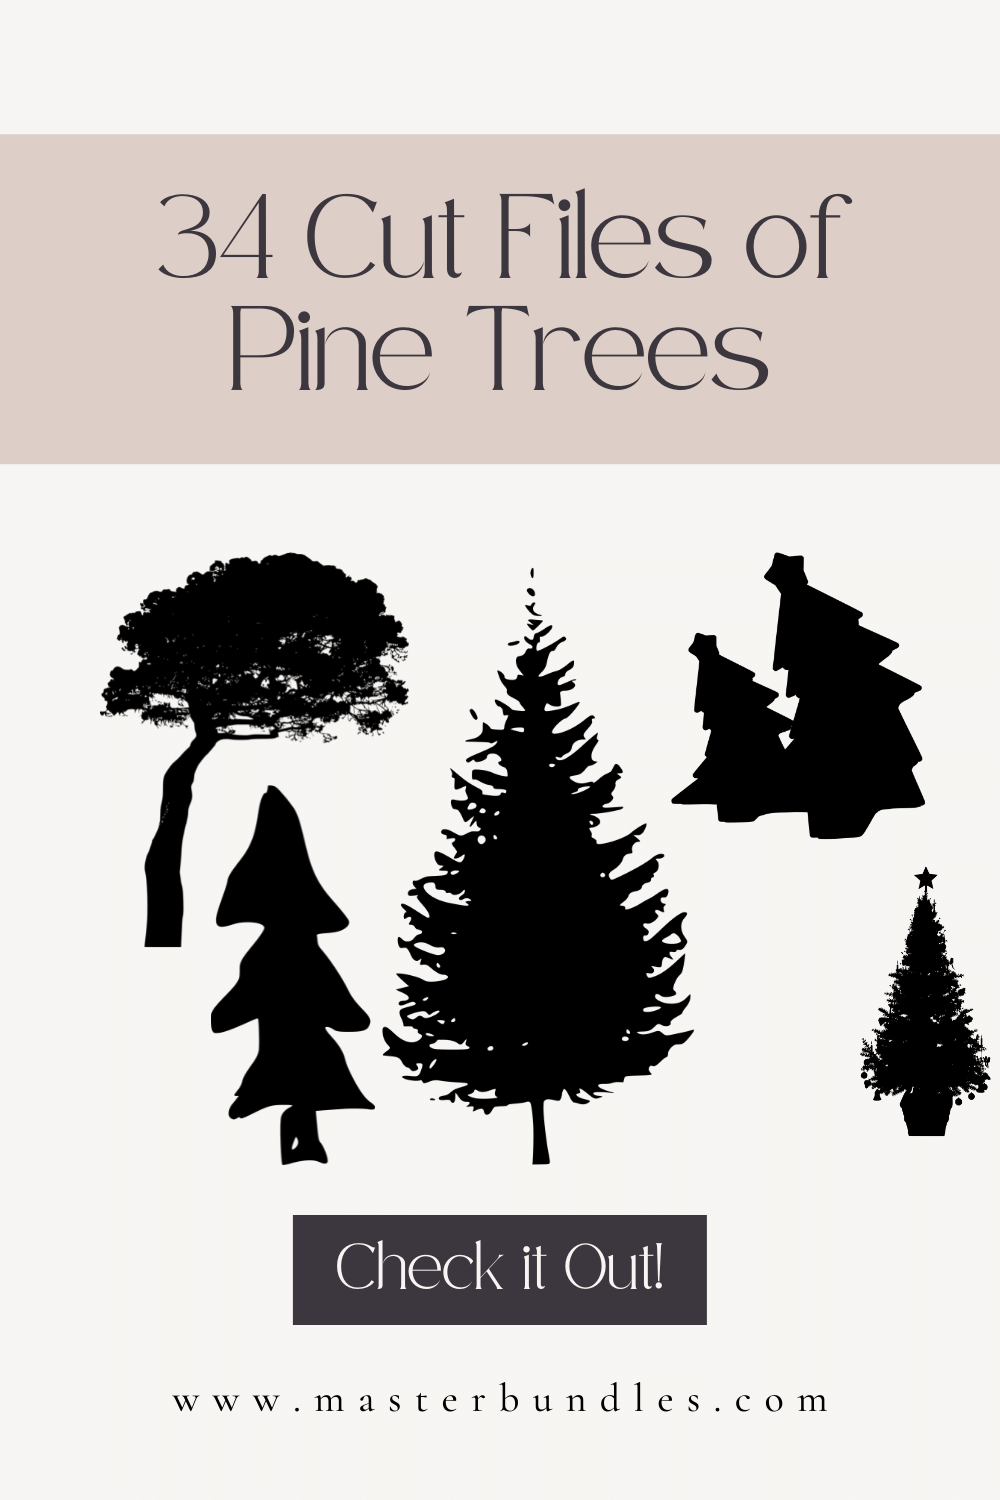 34 Cut Files of Pine Trees pinterest image.